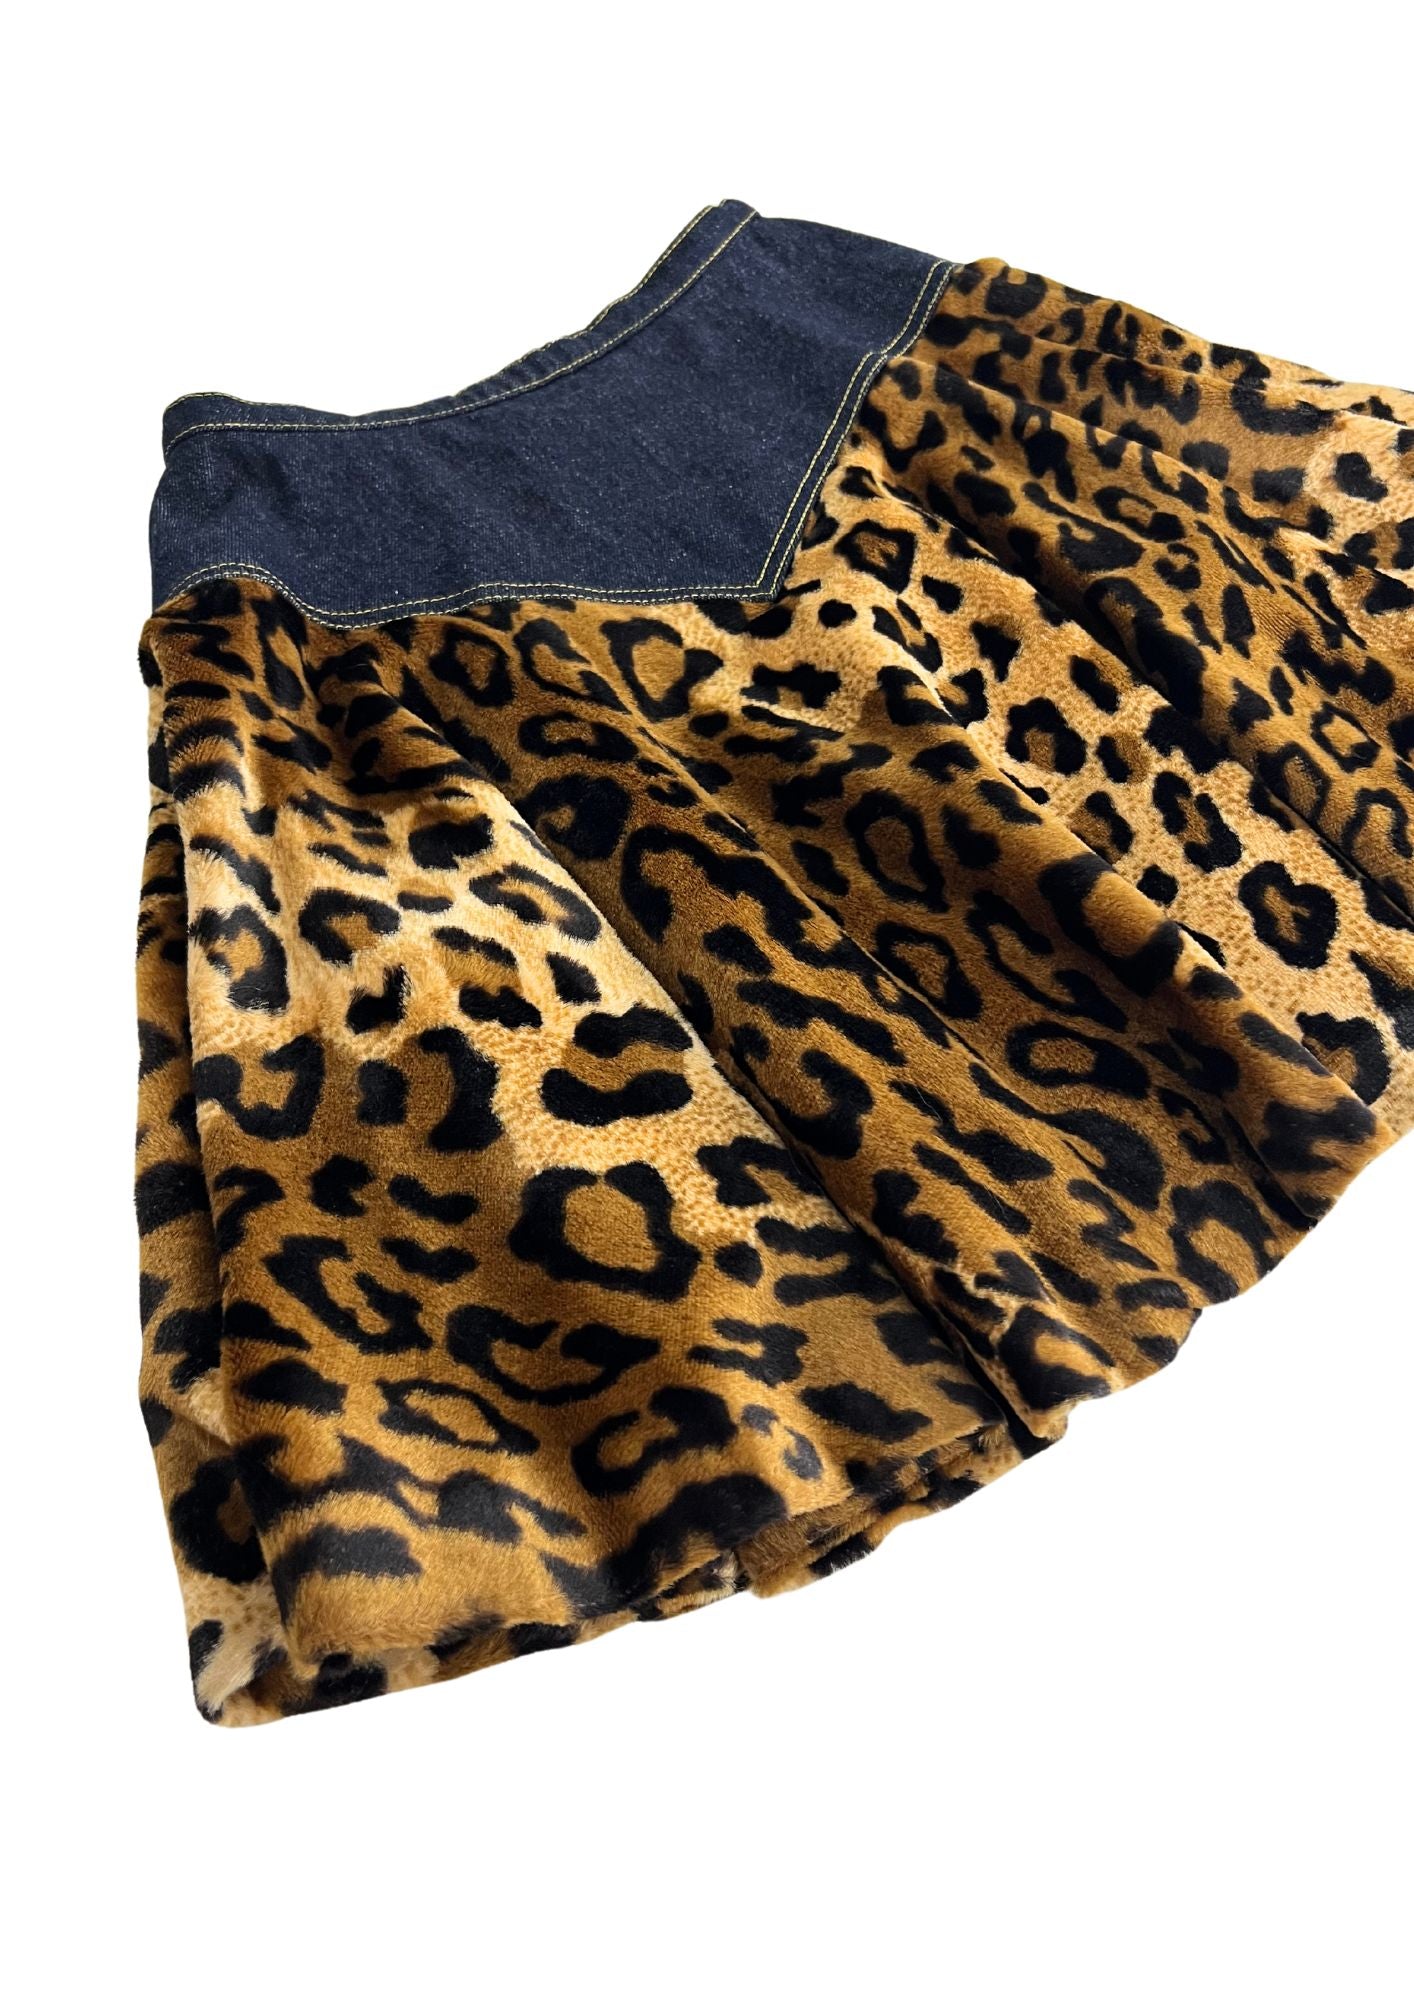 90s Hysteric Glamour Leopard Denim Skirt and Jacket Setup